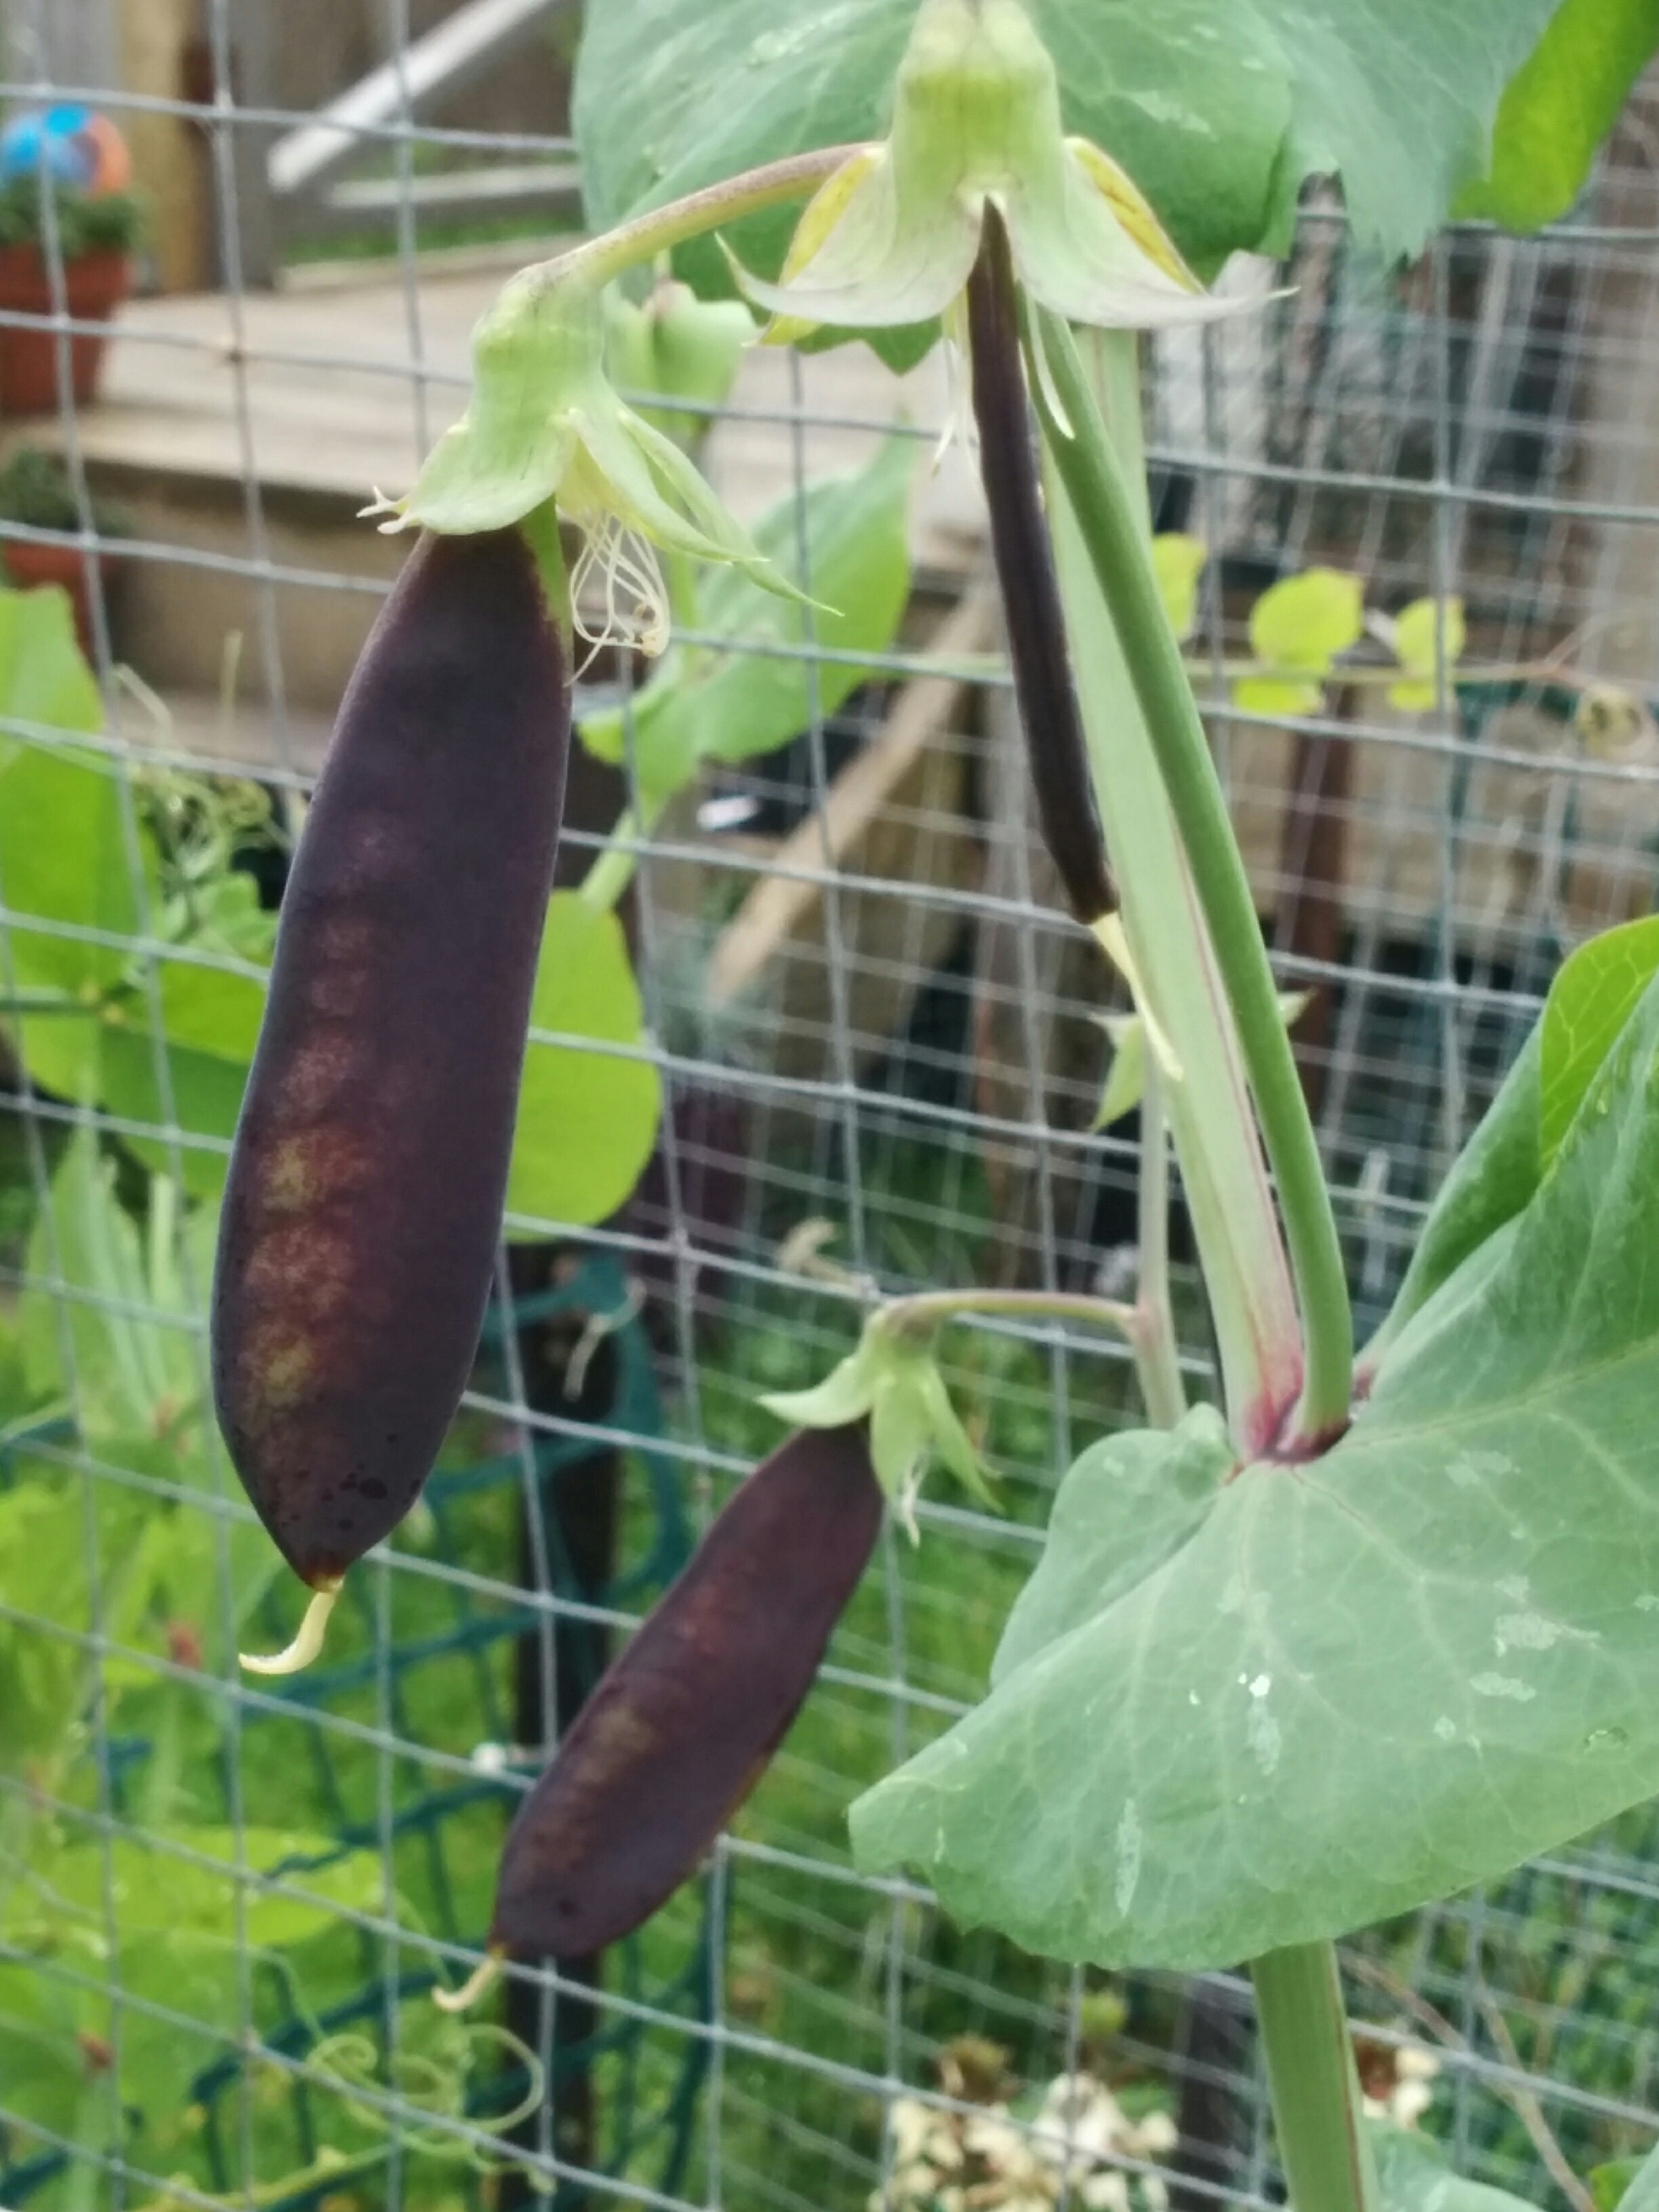 Purple Shelling Peas